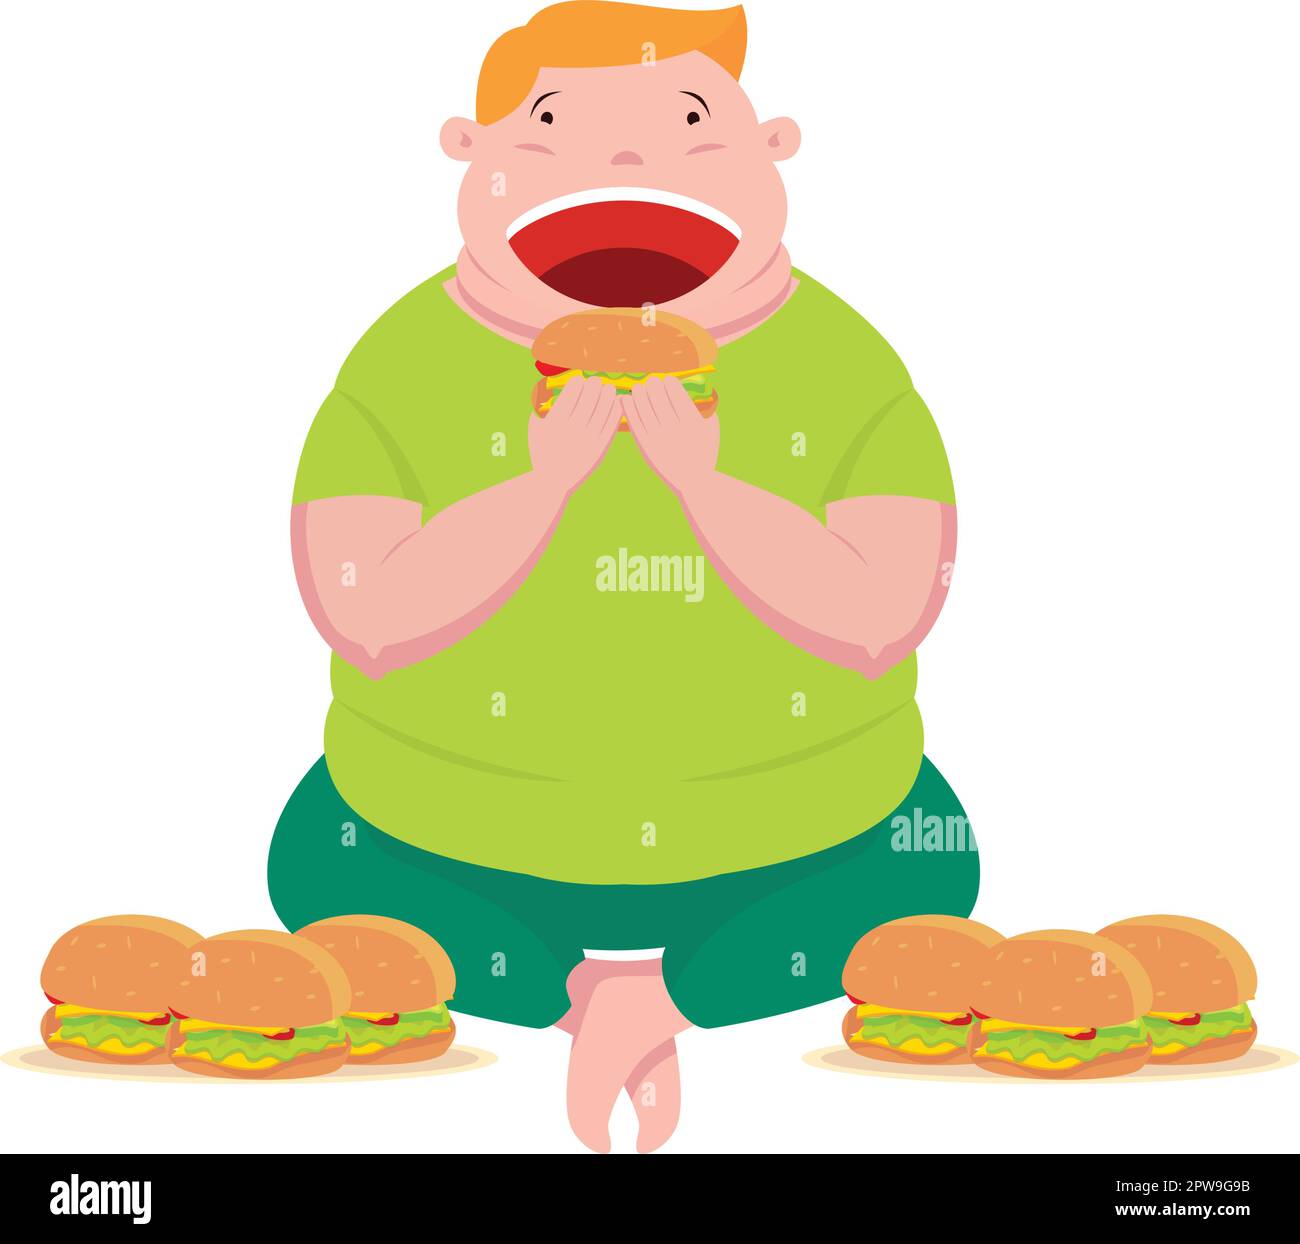 fat person eating mcdonalds cartoon